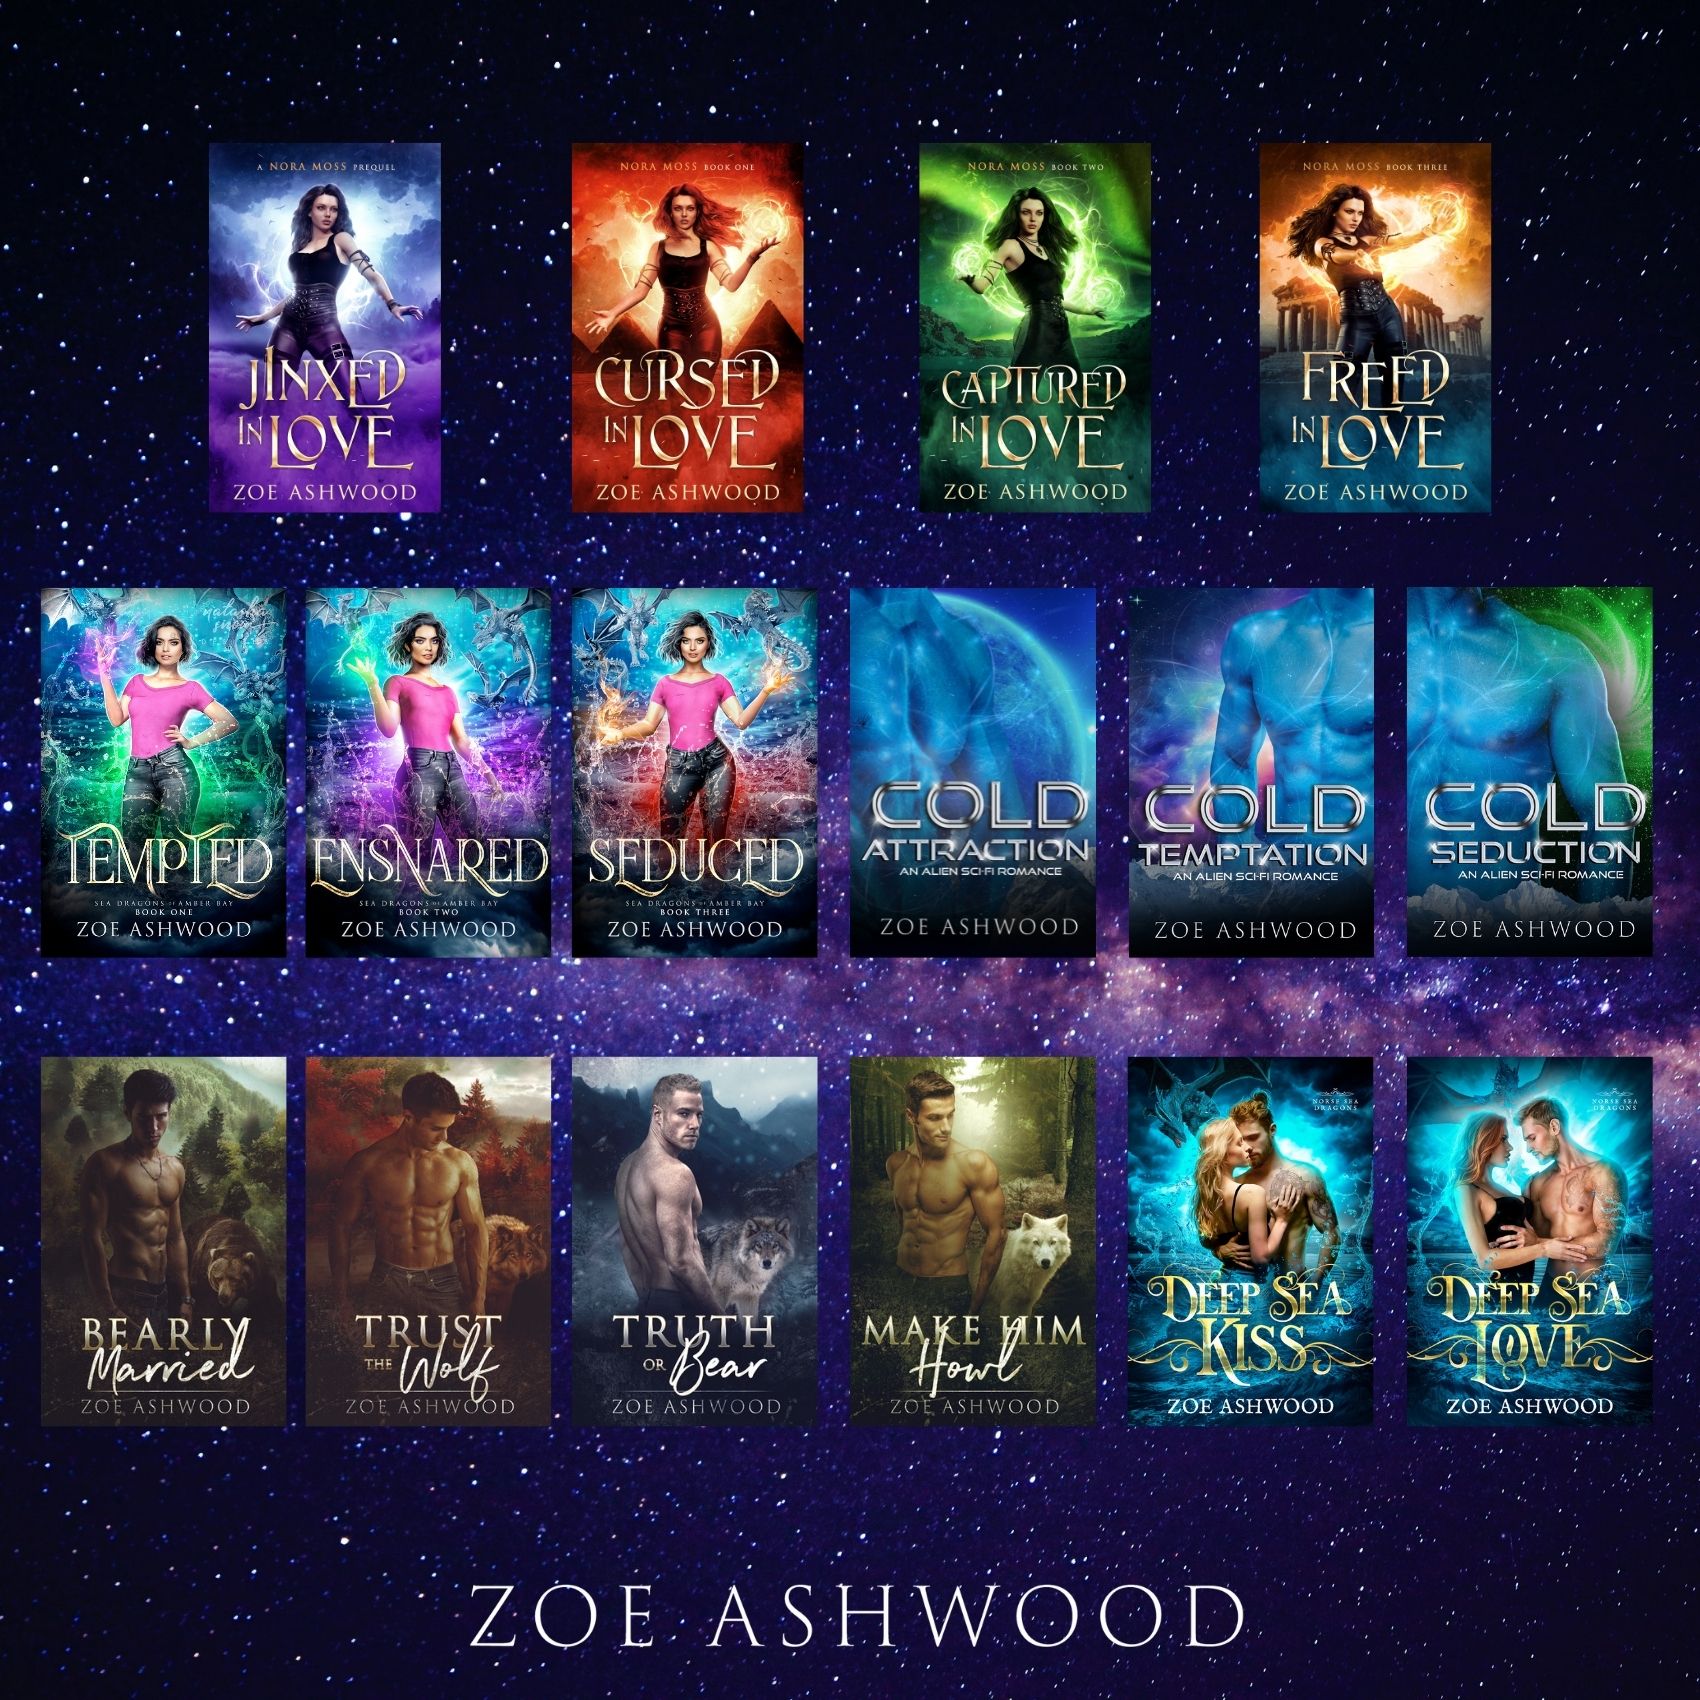 All of Zoe Ashwood's books